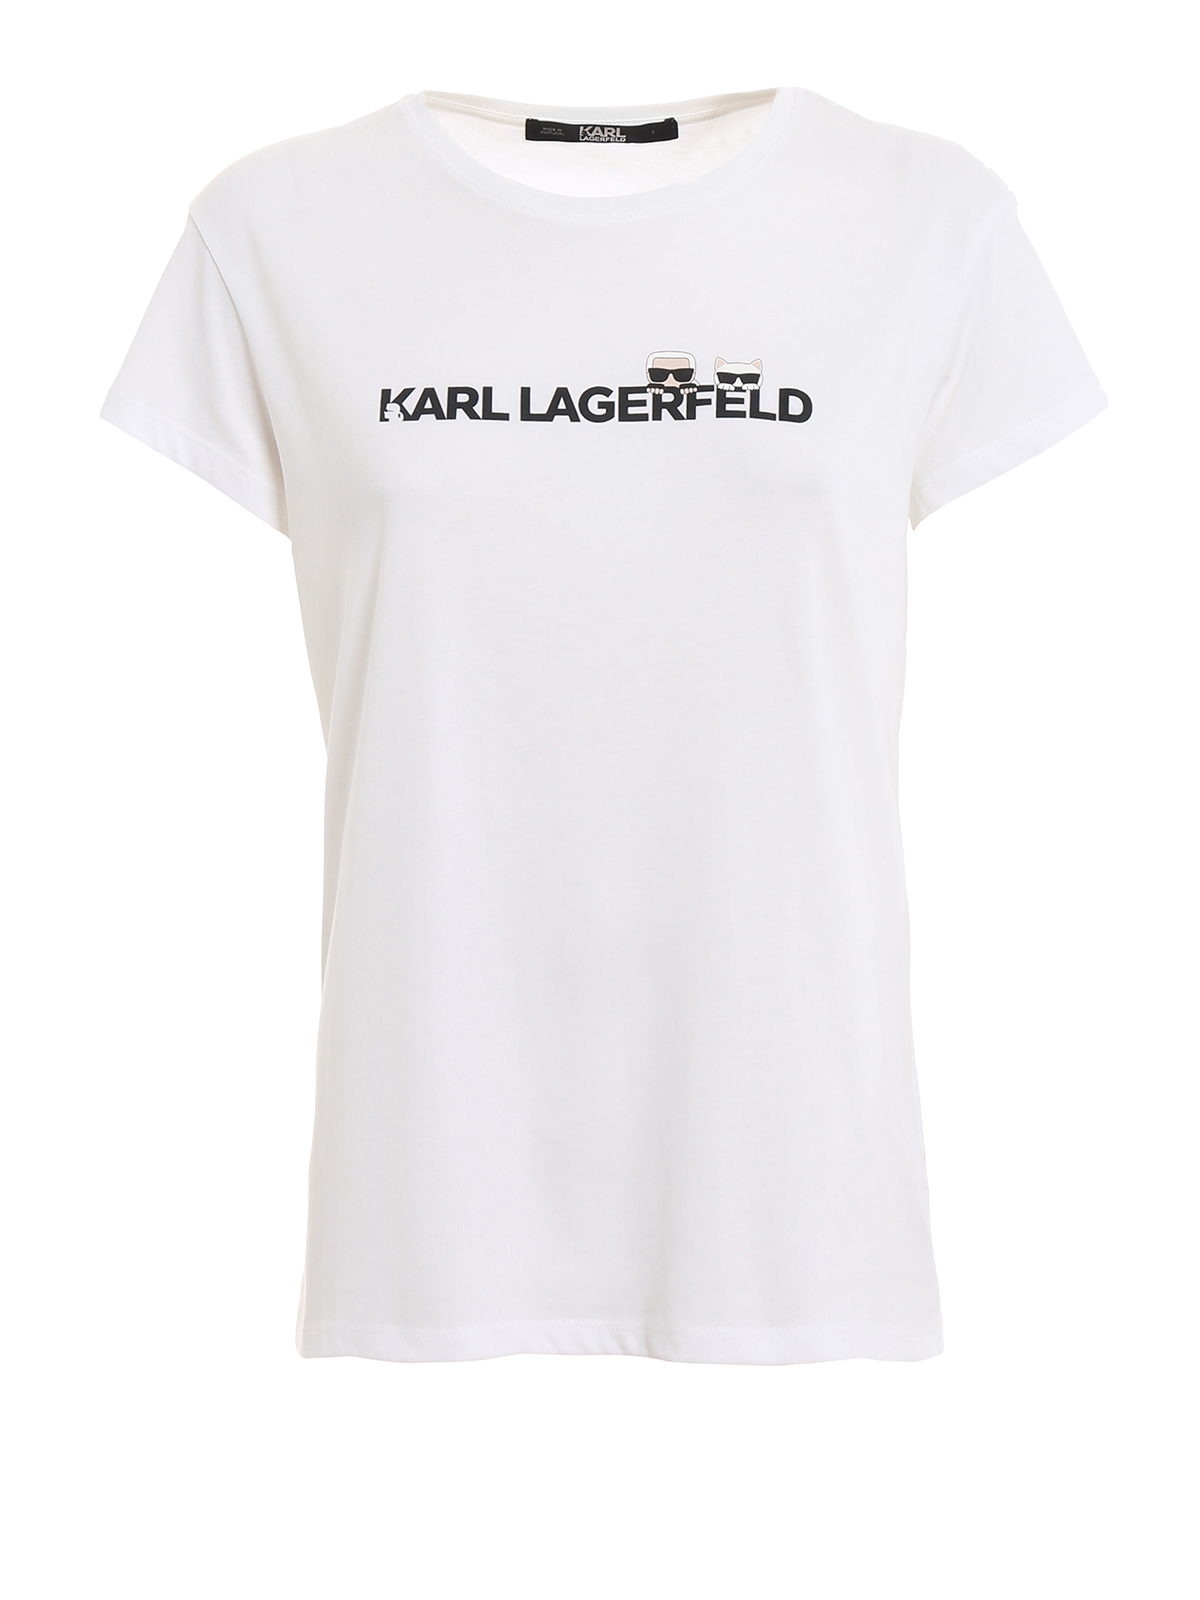 Karl Lagerfeld Ikonik White Cotton T-shirt